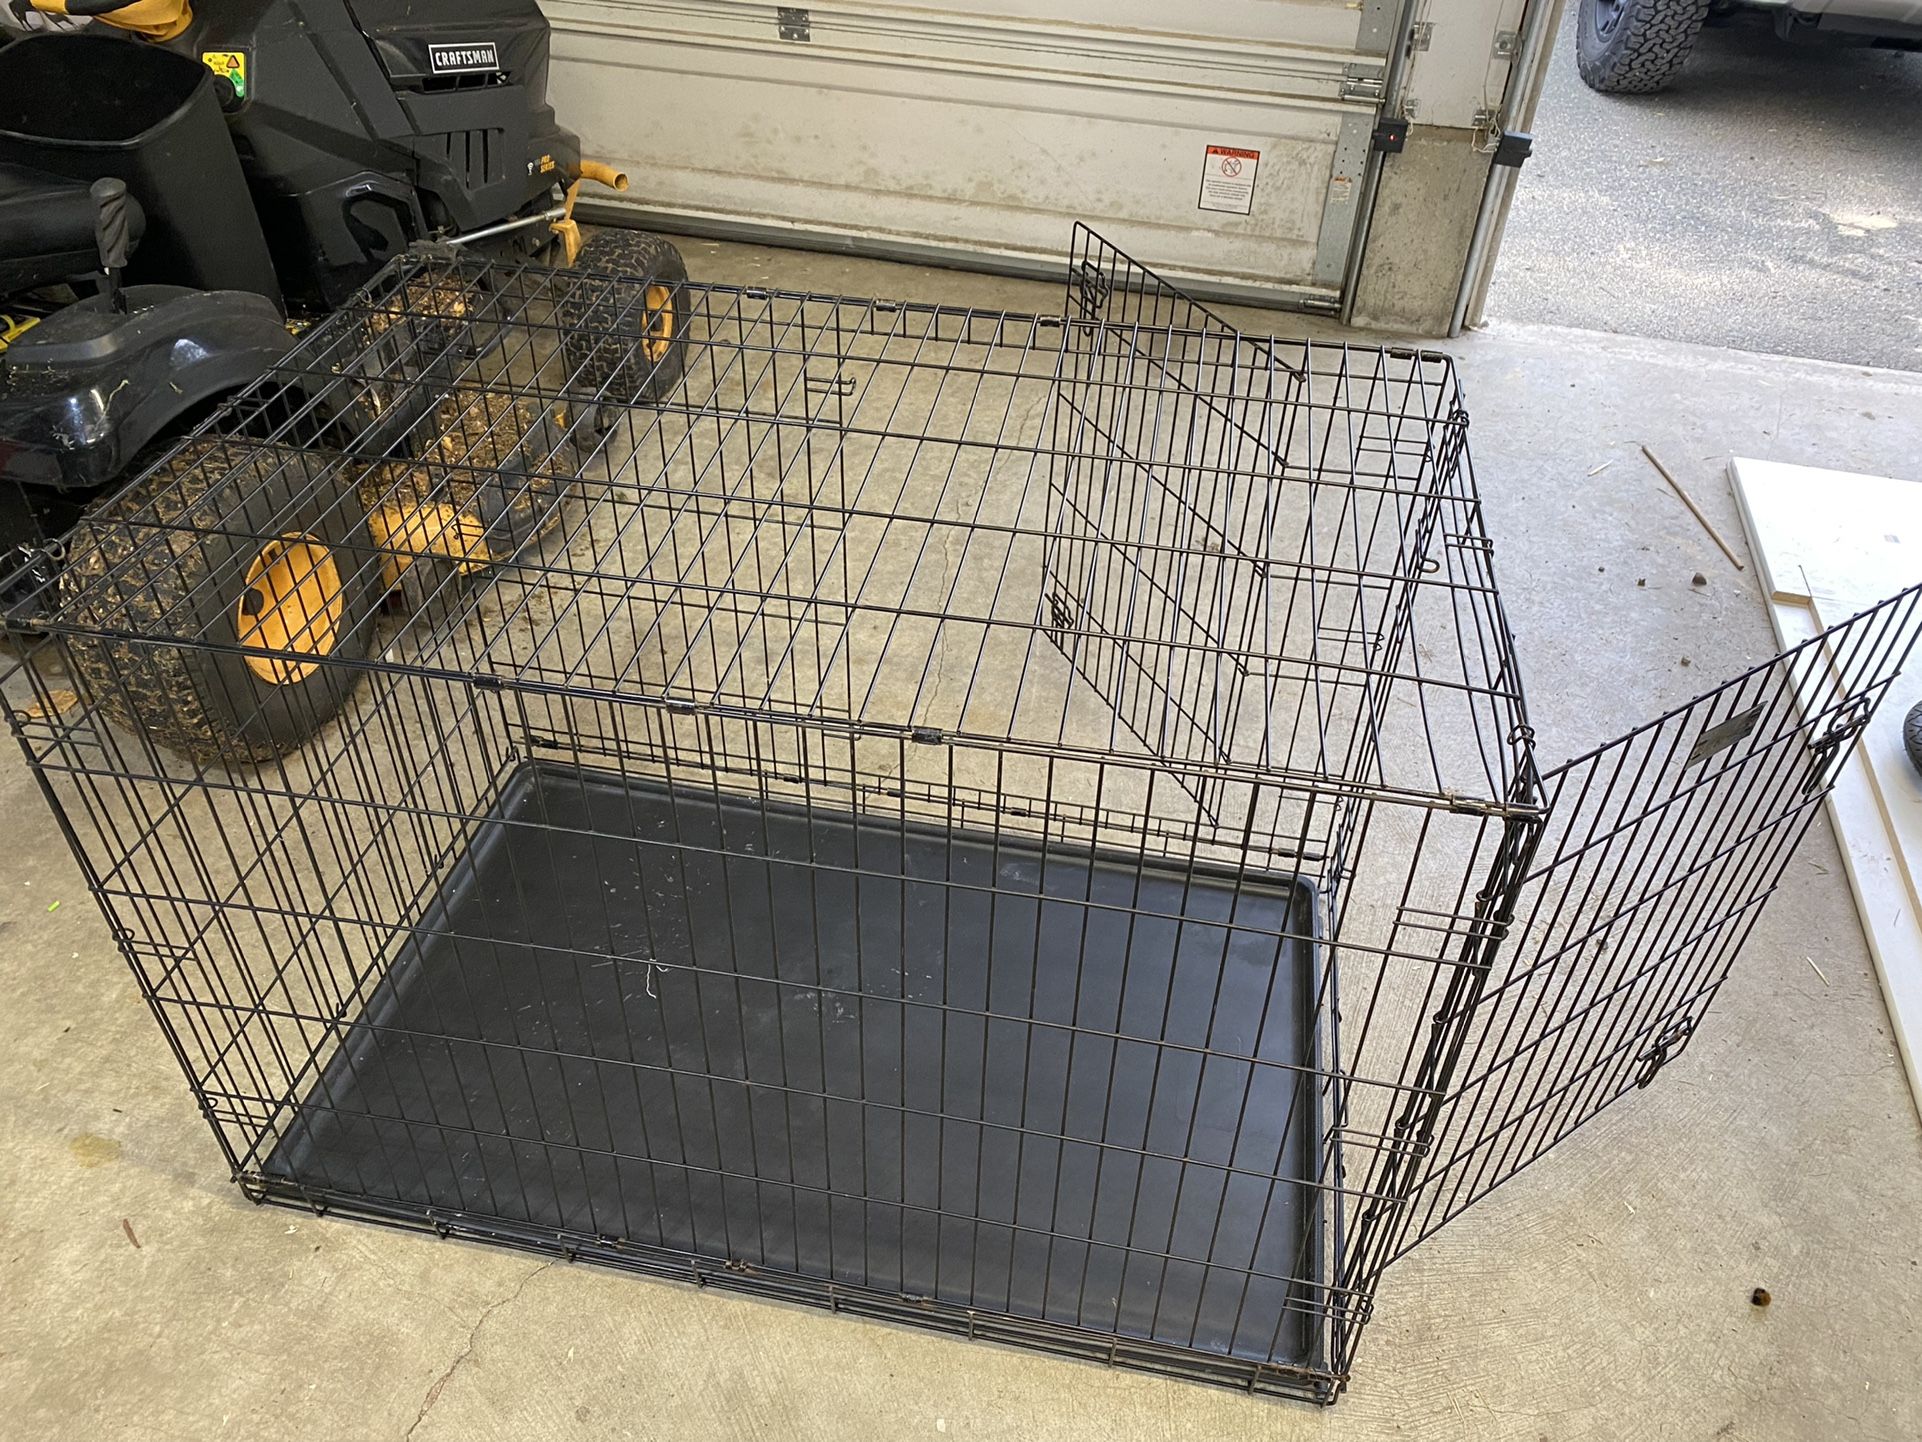 Metal dog or pet crate (large)